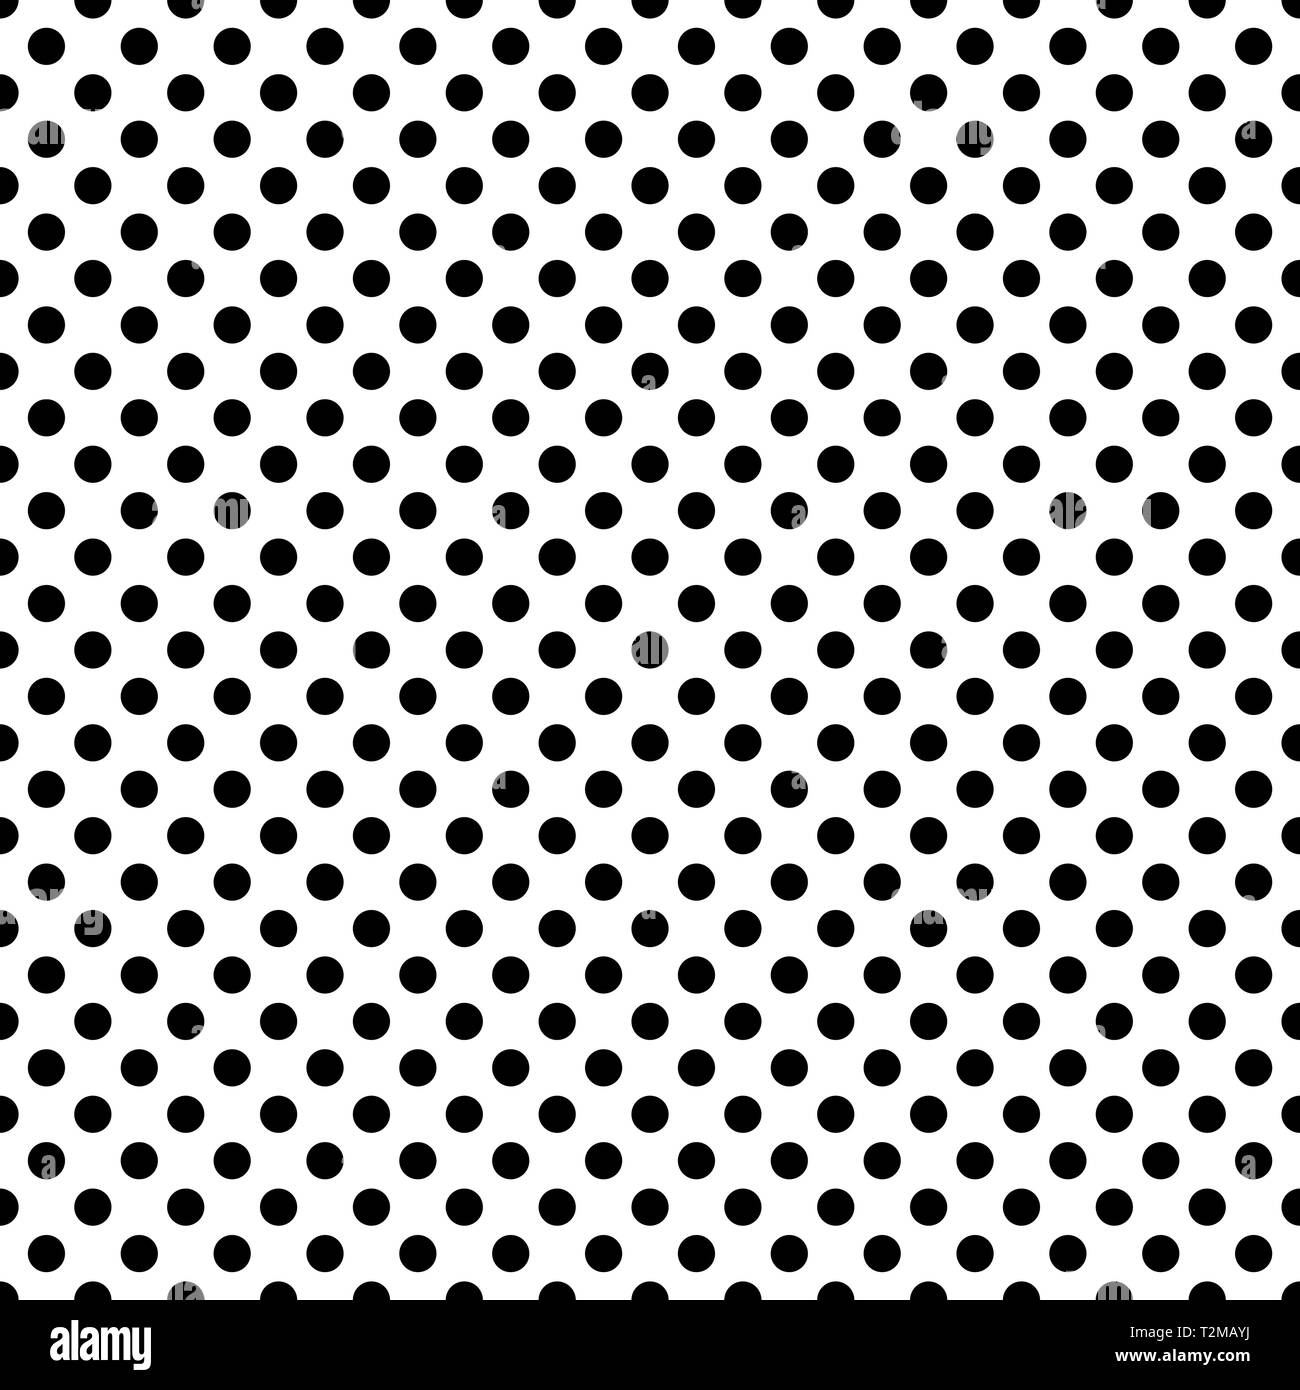 Polka dots pattern vector. Black on white. Stock Vector